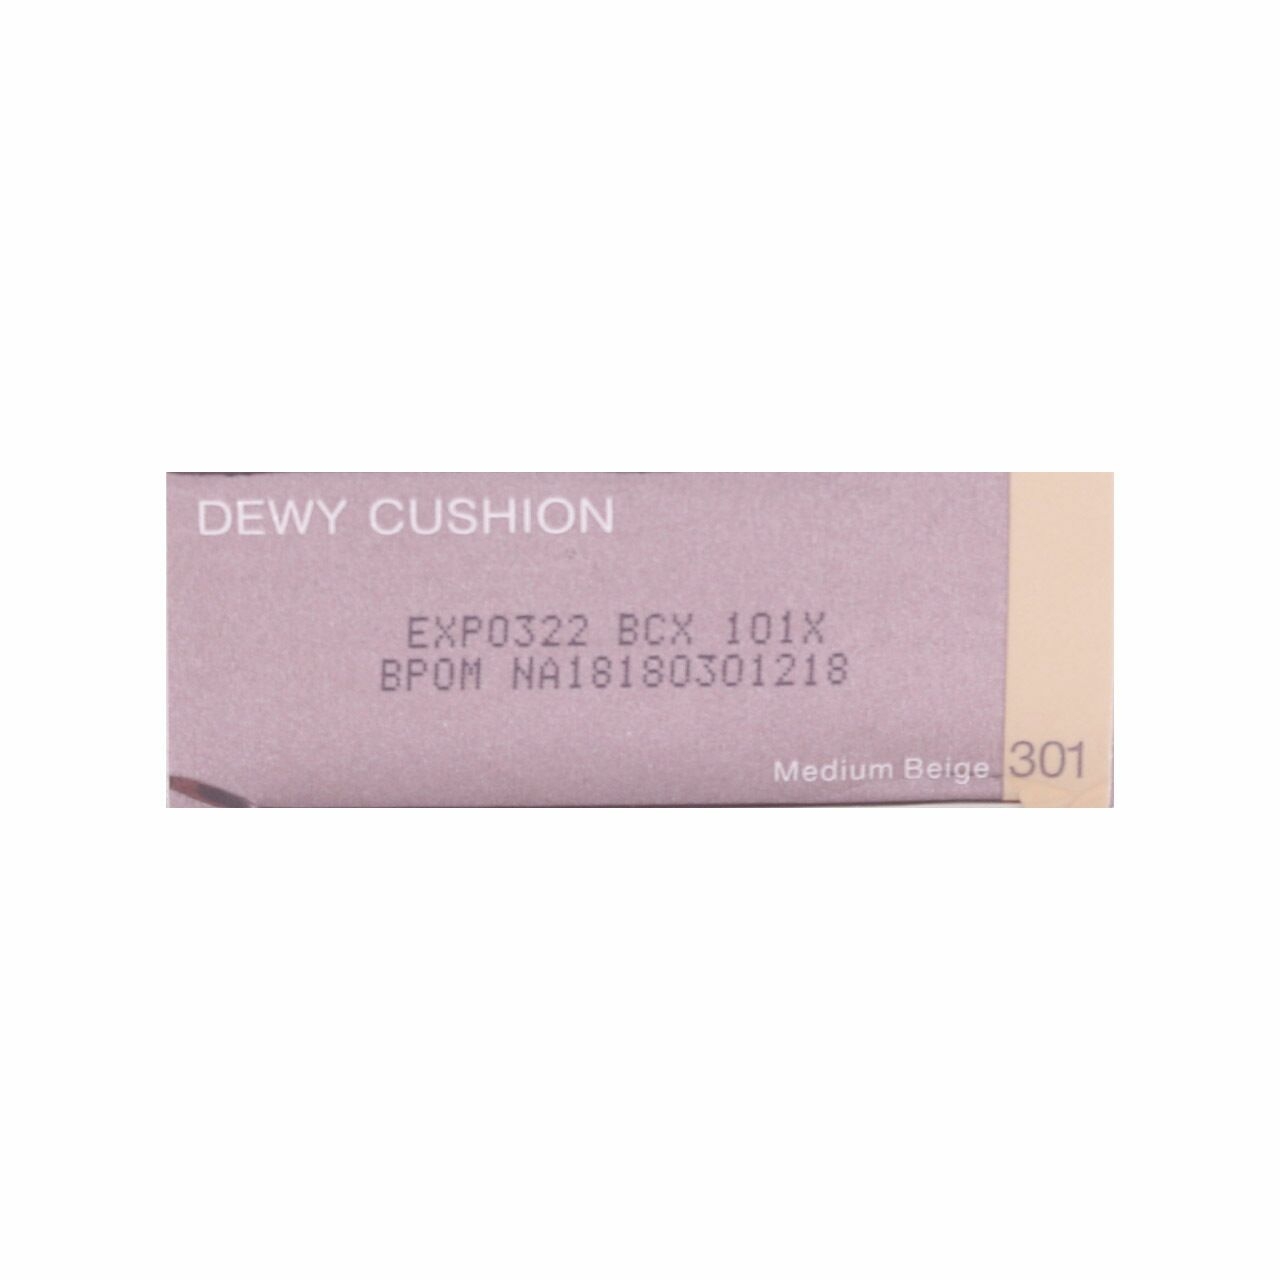 Pixy Dewy Cushion with Moisturizing Botanical Extract Smooth Polished Powder SPF 23 PA++ 301 Medium Beige Faces